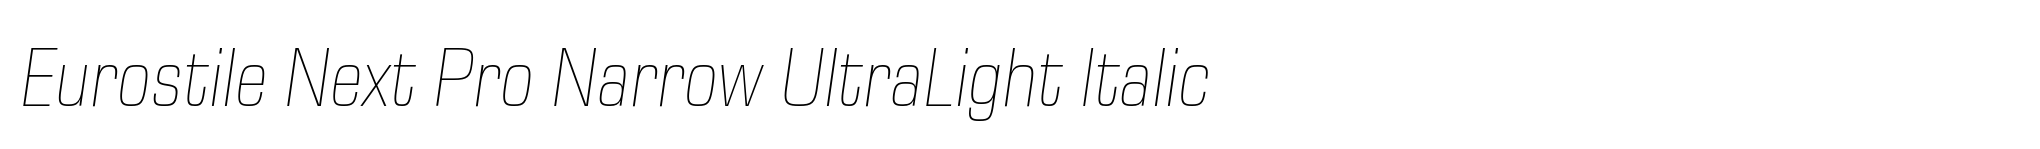 Eurostile Next Pro Narrow UltraLight Italic image